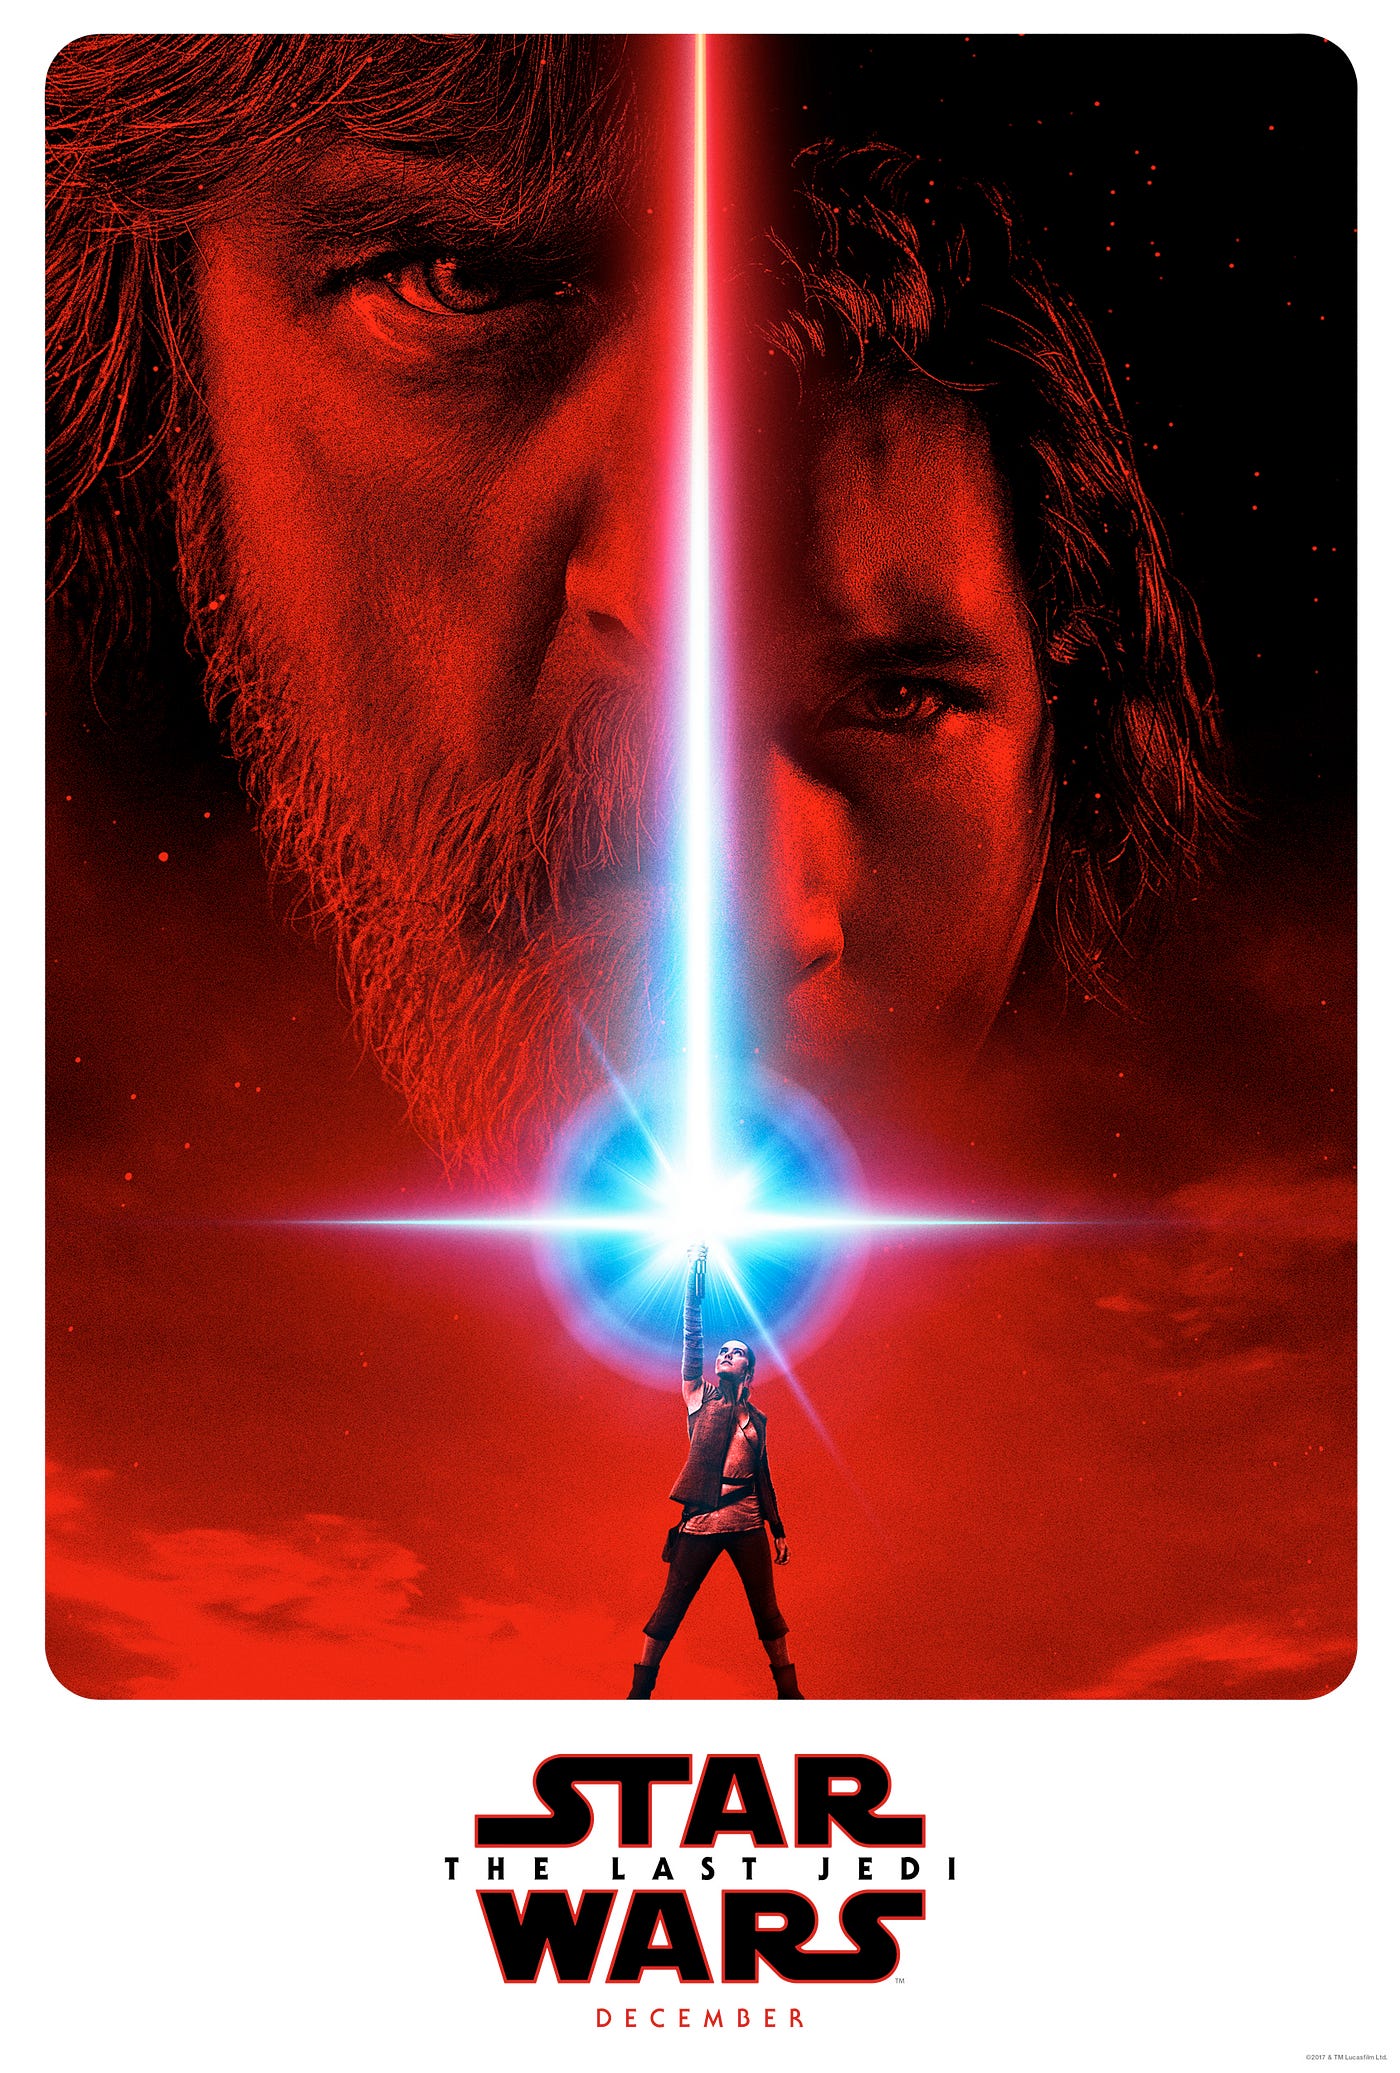 Star Wars: The Last Jedi review [Spoiler free]